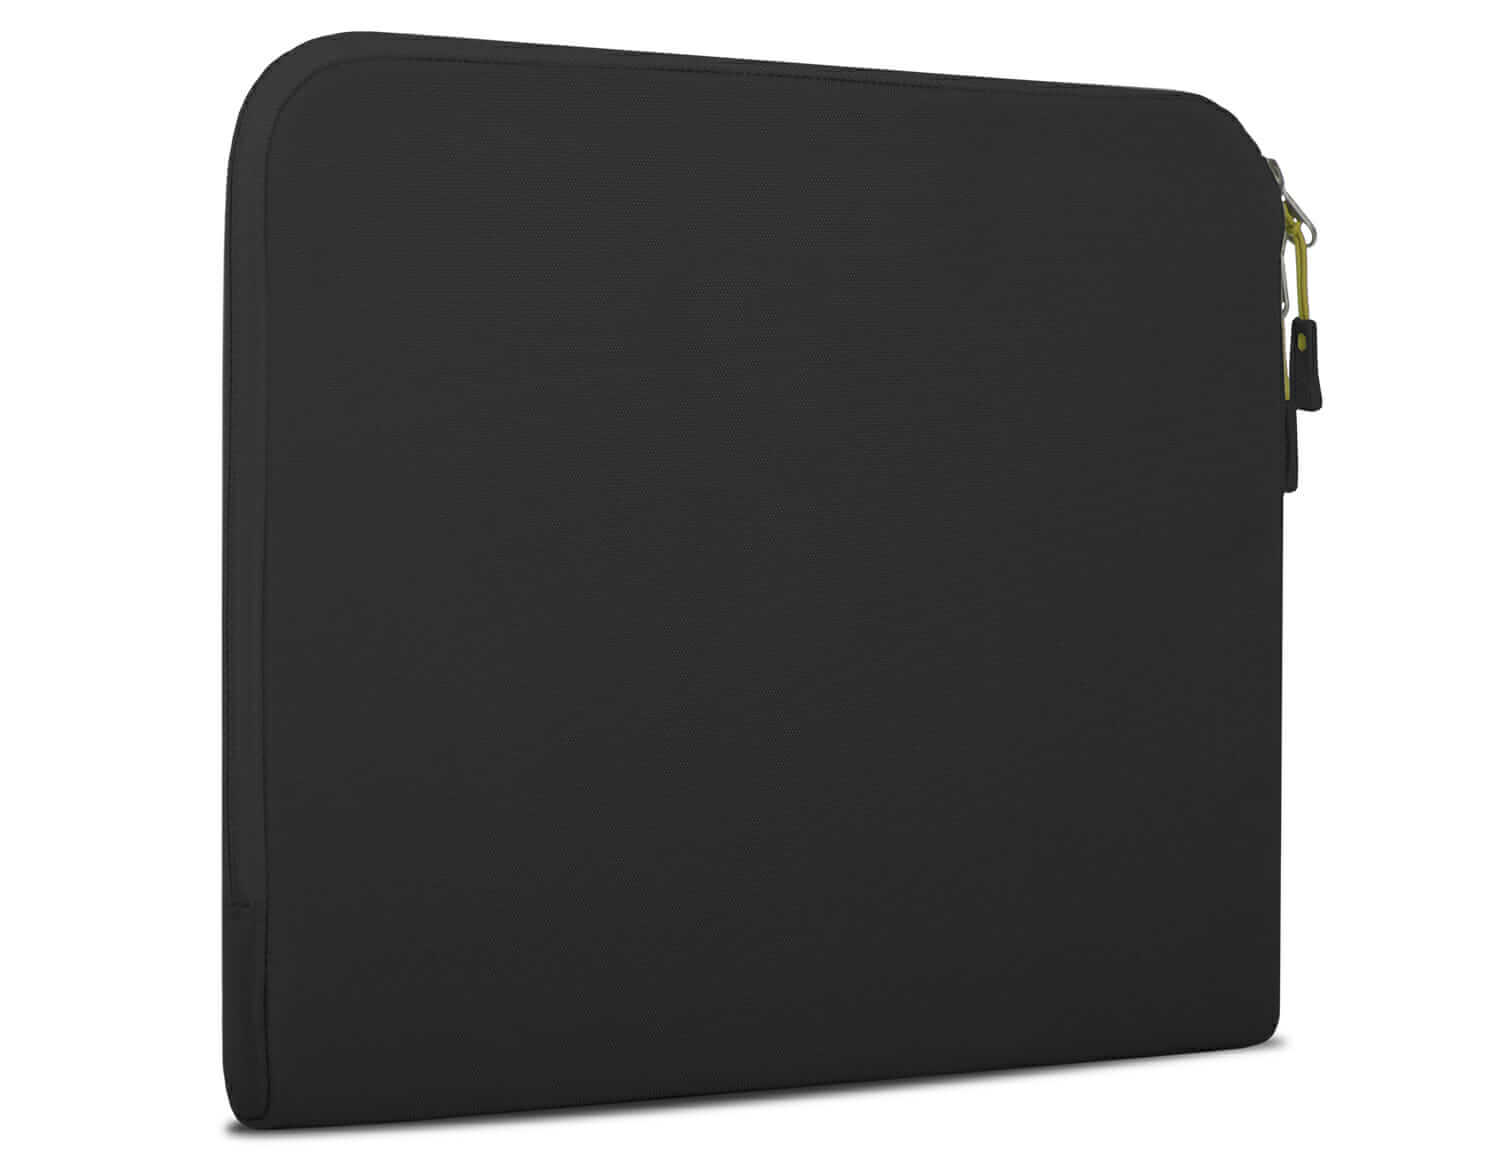 STM Myth Laptop Sleeve for 14-inch MacBook